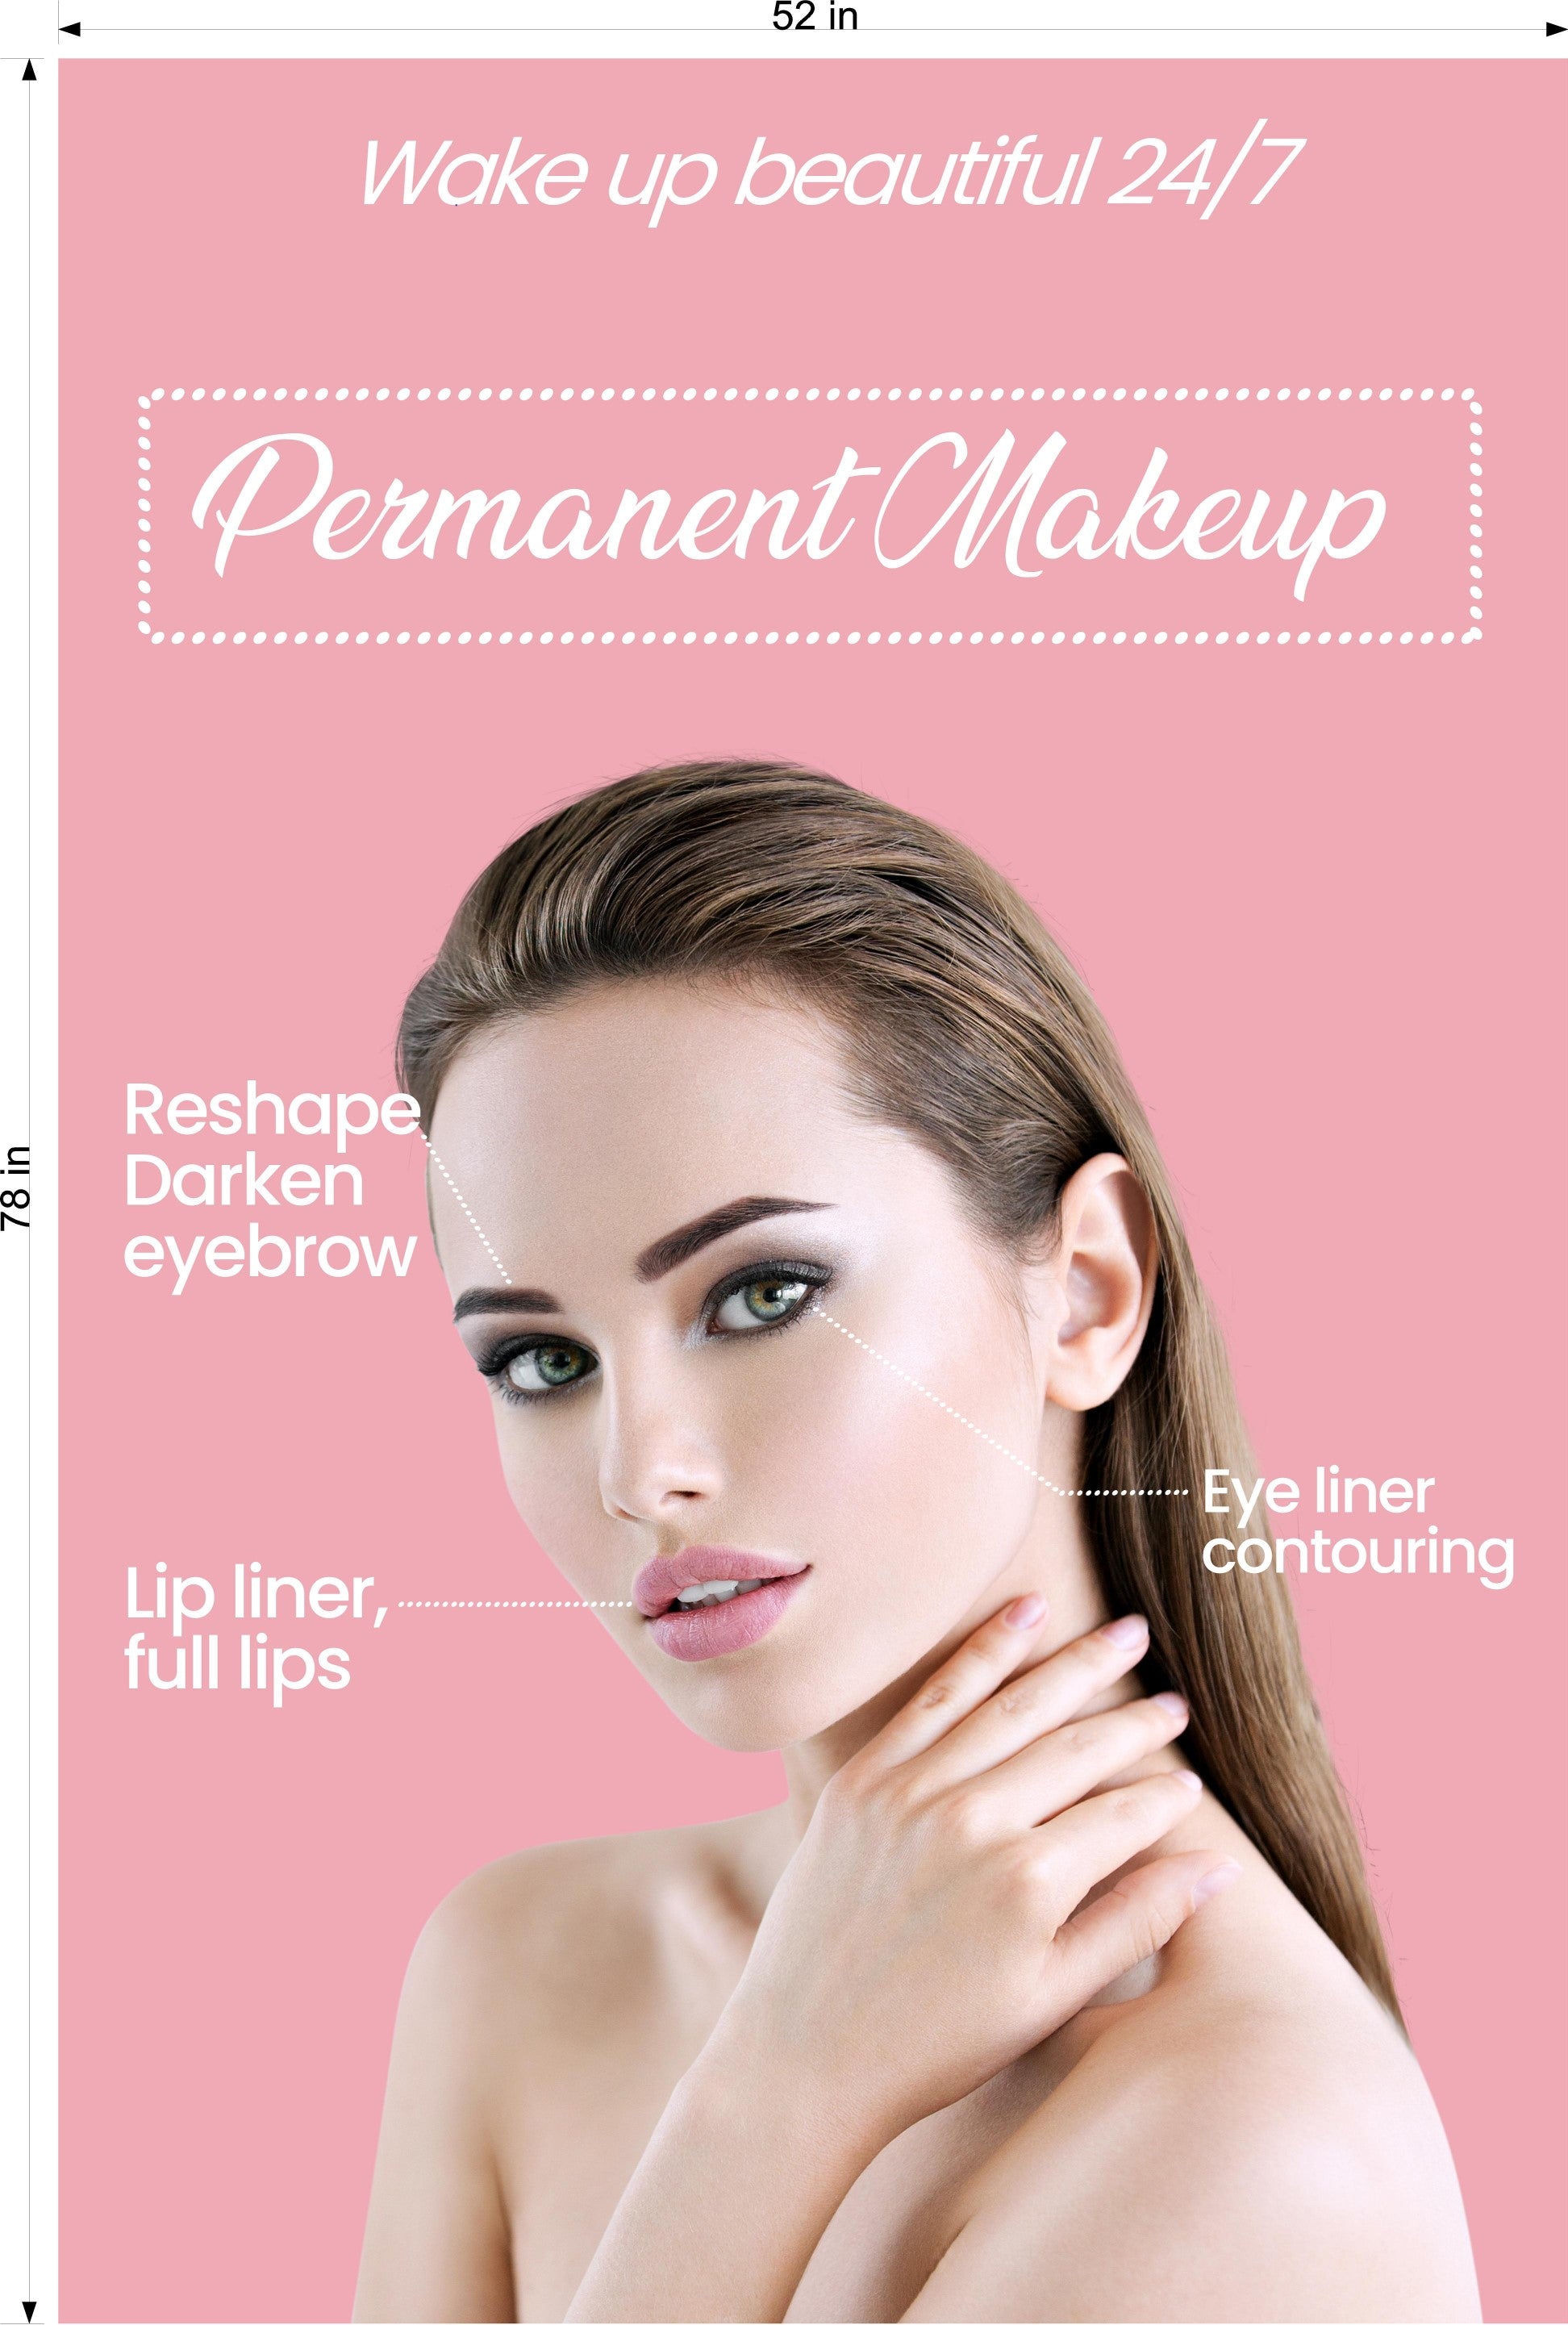 Permanent Perforated Windows Makeup | NAILSIGN.com – Nail Signs